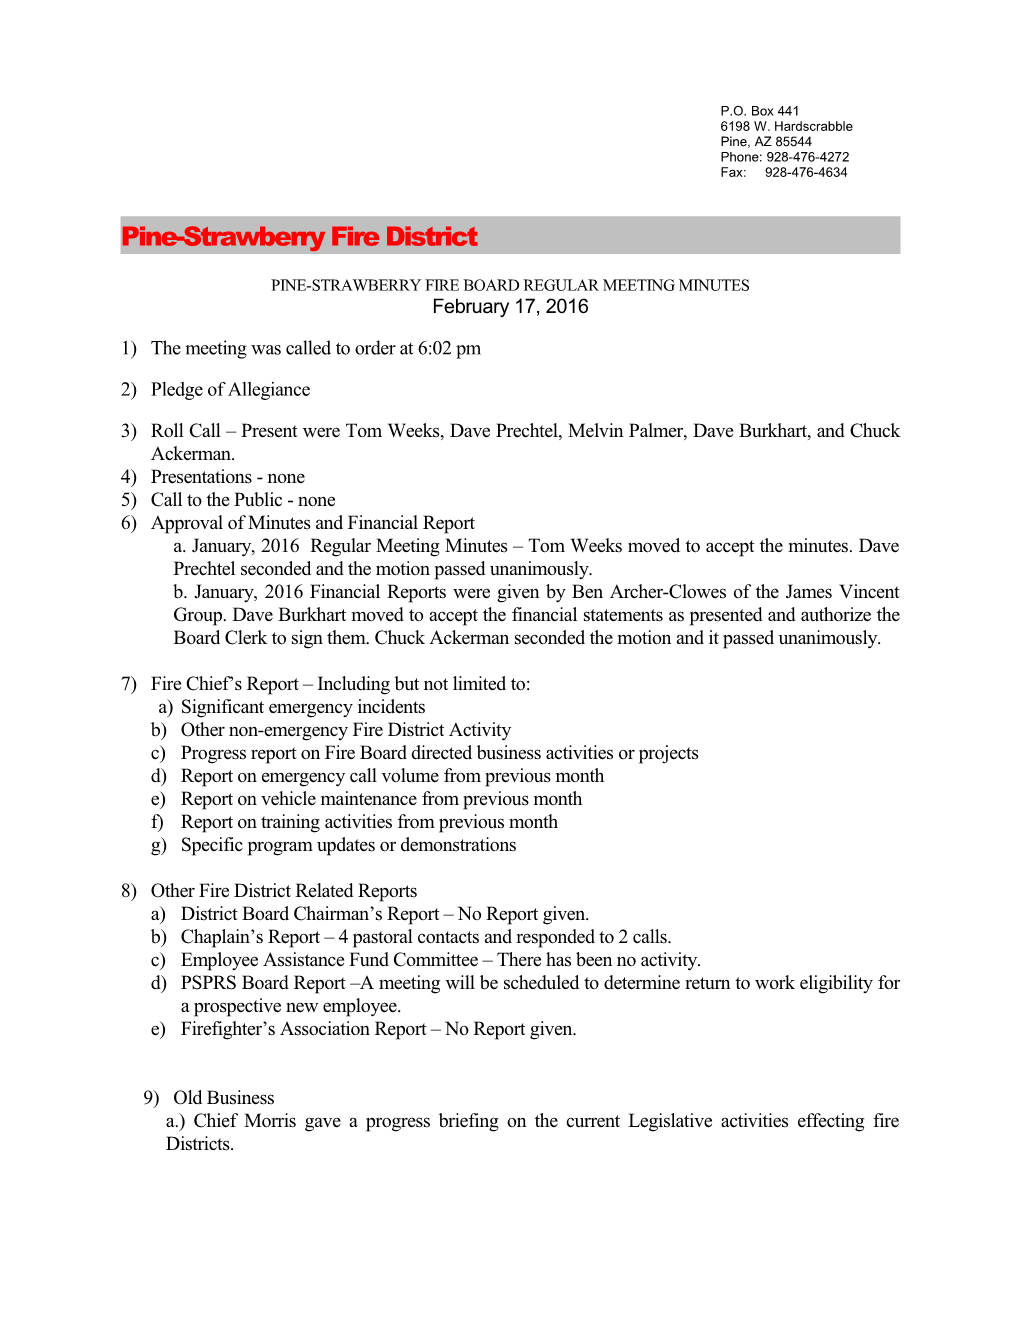 Pine-Strawberry Fire Board Regular Meeting Minutes